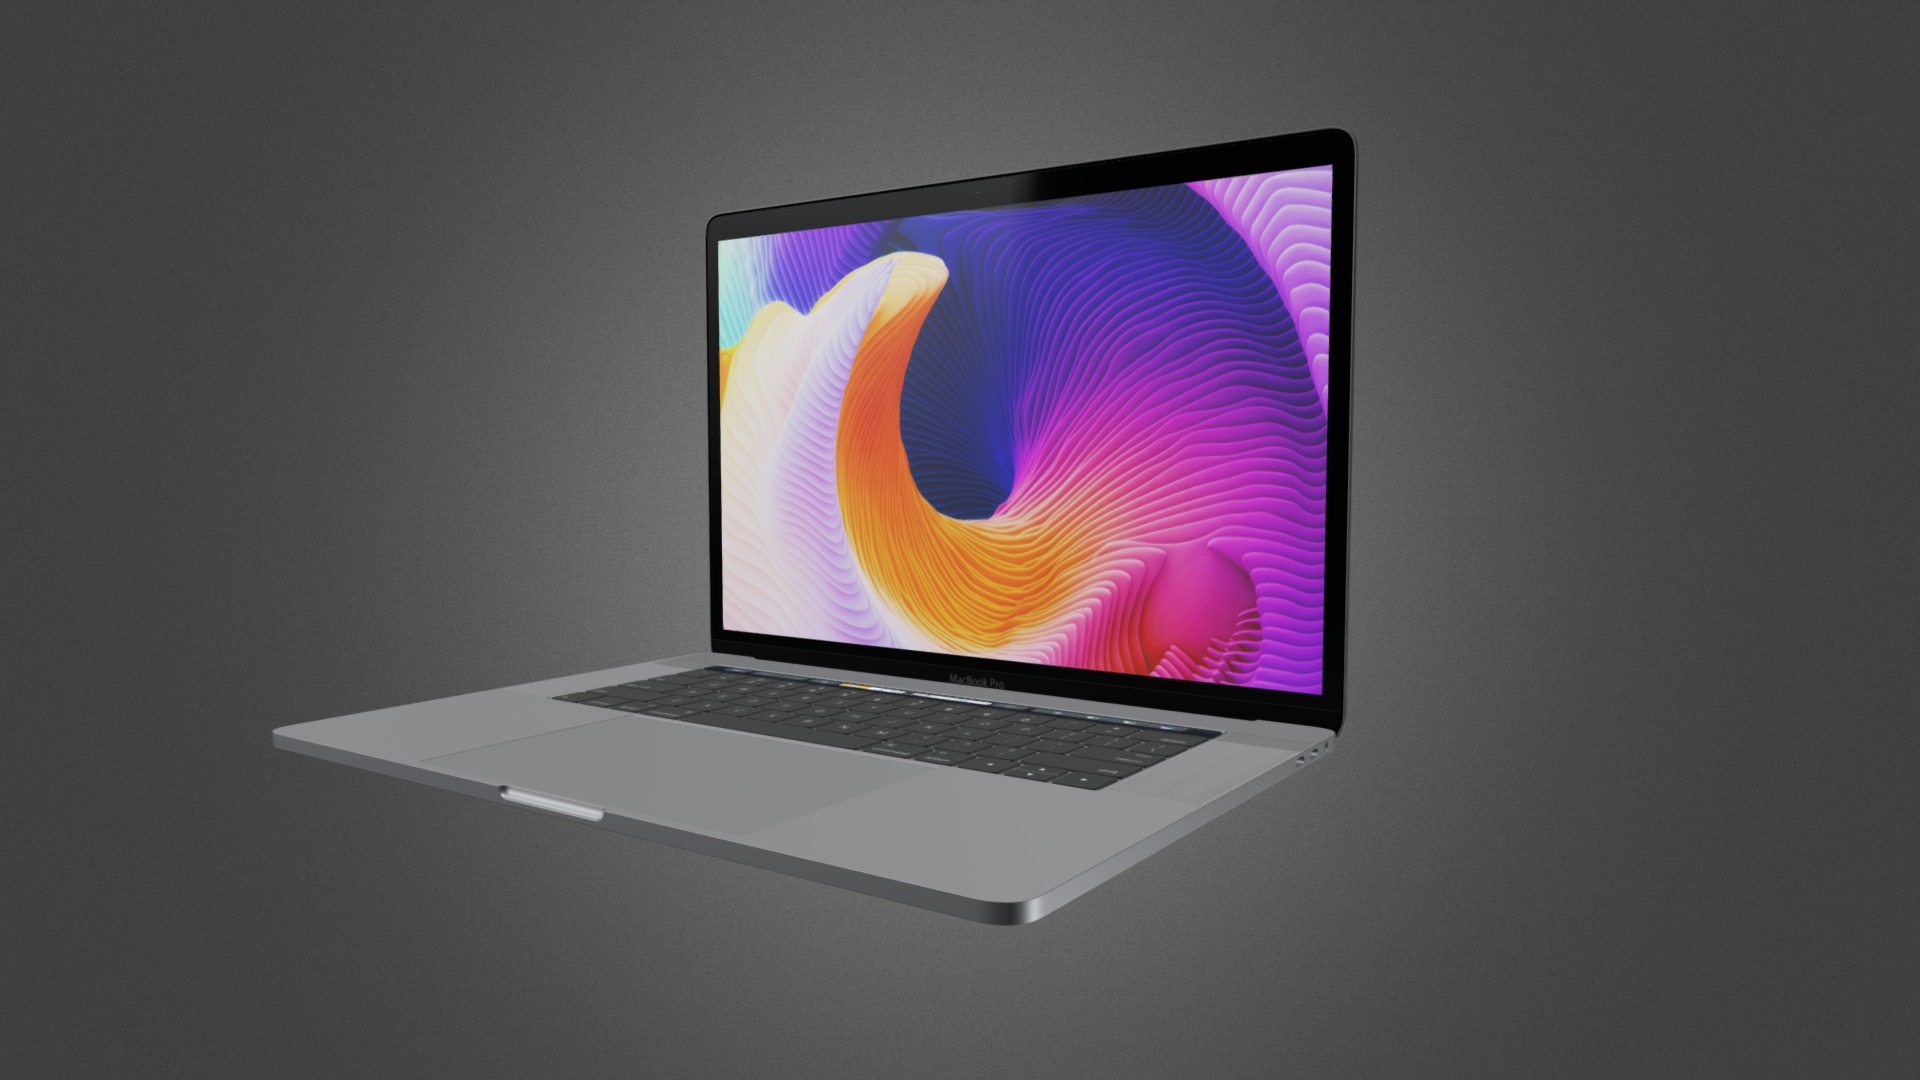 3D model Apple Macbook Pro 15 Inch A1707 for Element 3D - This is a 3D model of the Apple Macbook Pro 15 Inch A1707 for Element 3D. The 3D model is about a laptop with a colorful design.